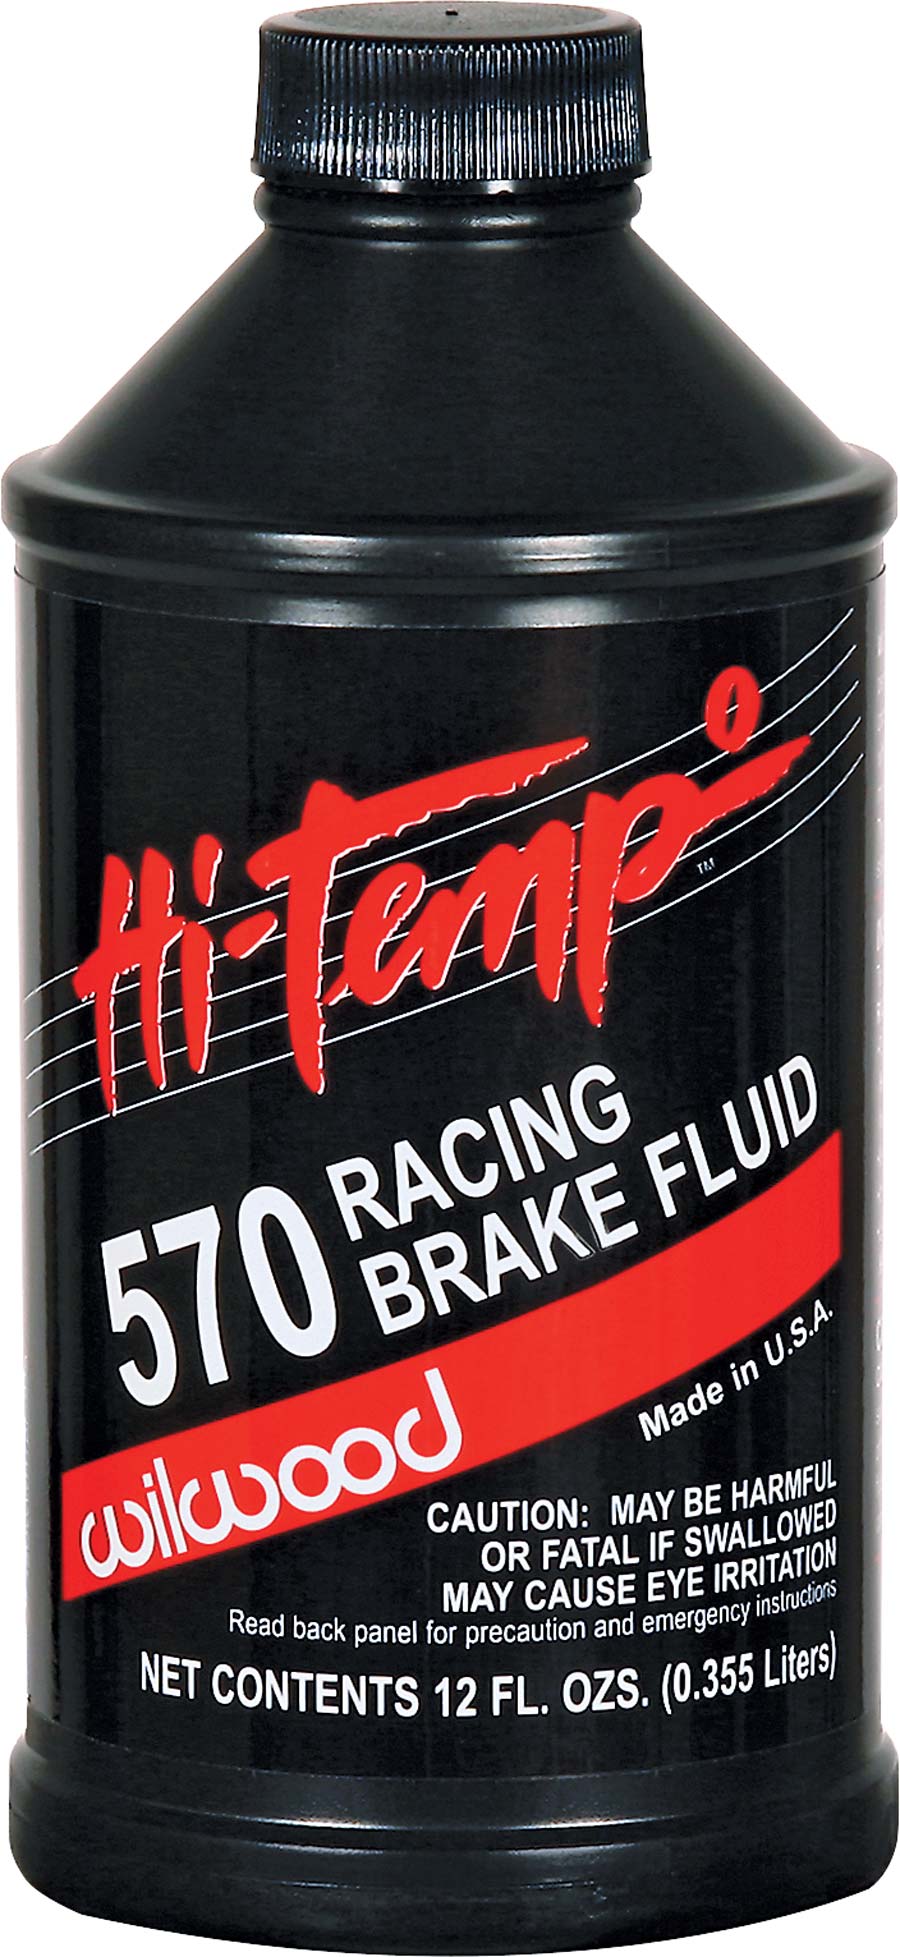 Bottle of Wilwood Hi-Temp brake fluid